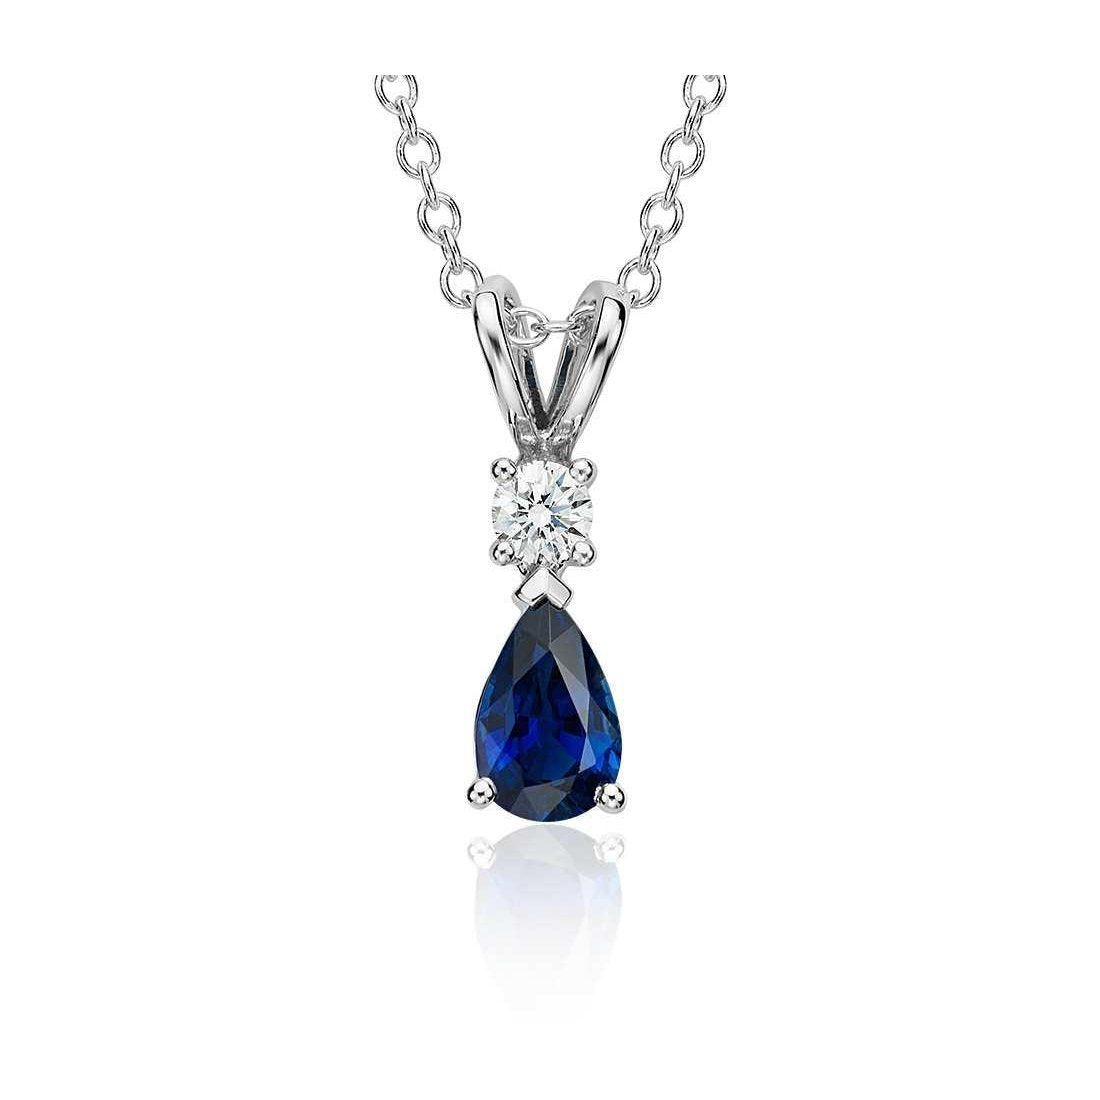 Zaffiro blu con collana pendente di diamanti 2 carati oro bianco 14 carati - harrychadent.it